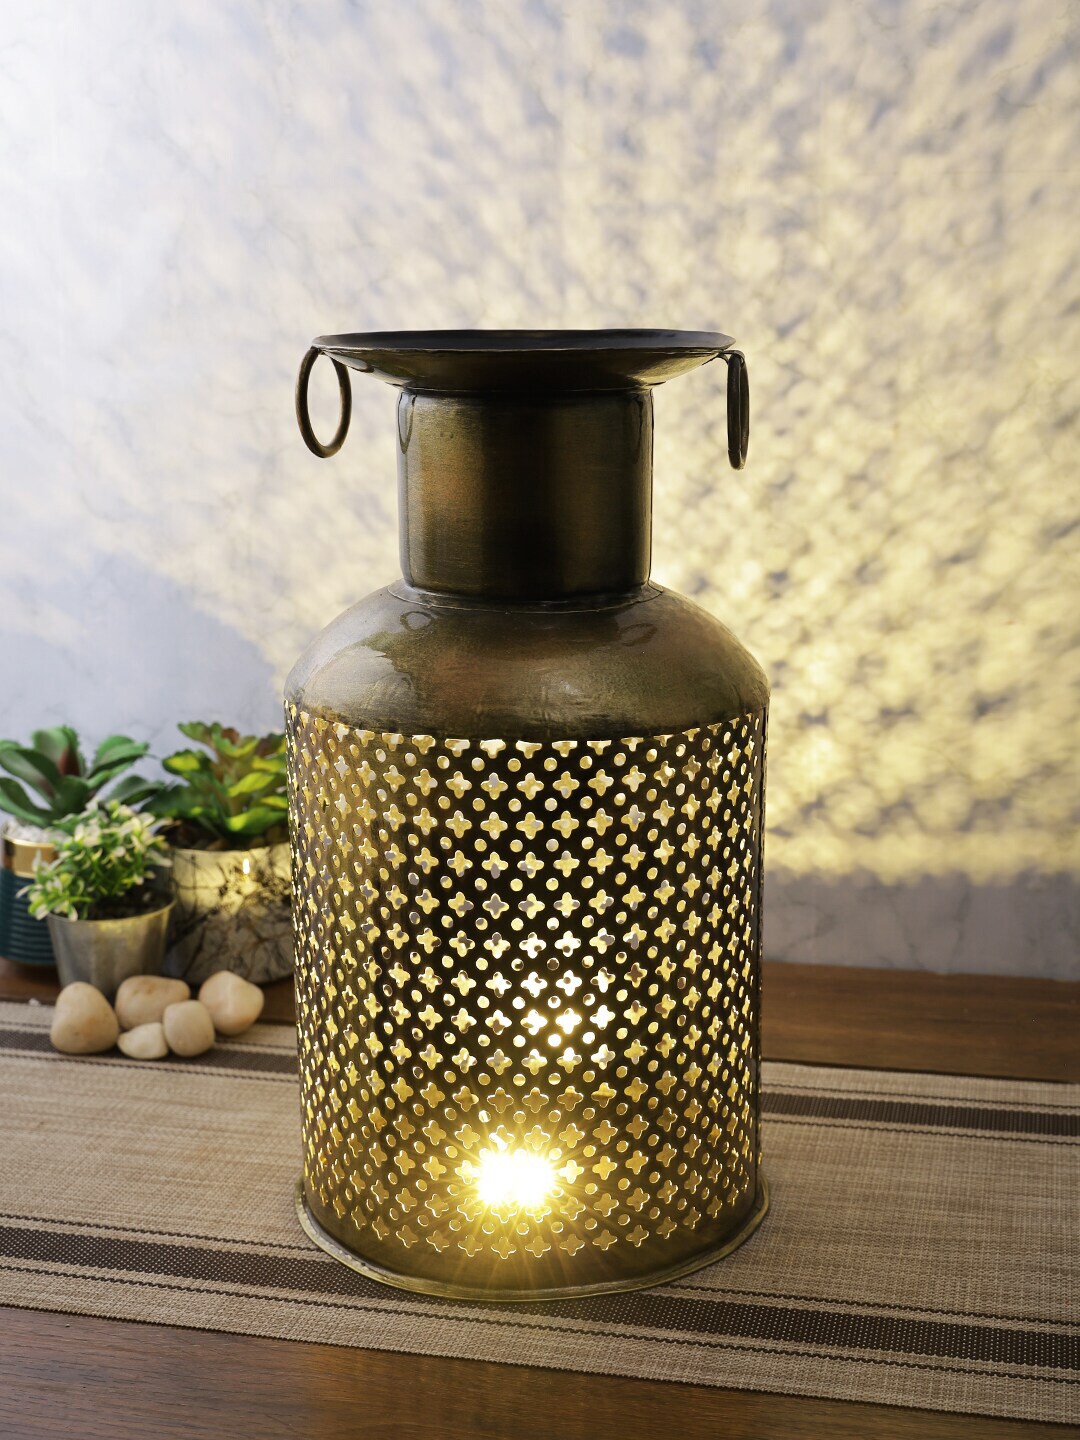 Aapno Rajasthan Gold-Toned Metal Floor Lamp Price in India